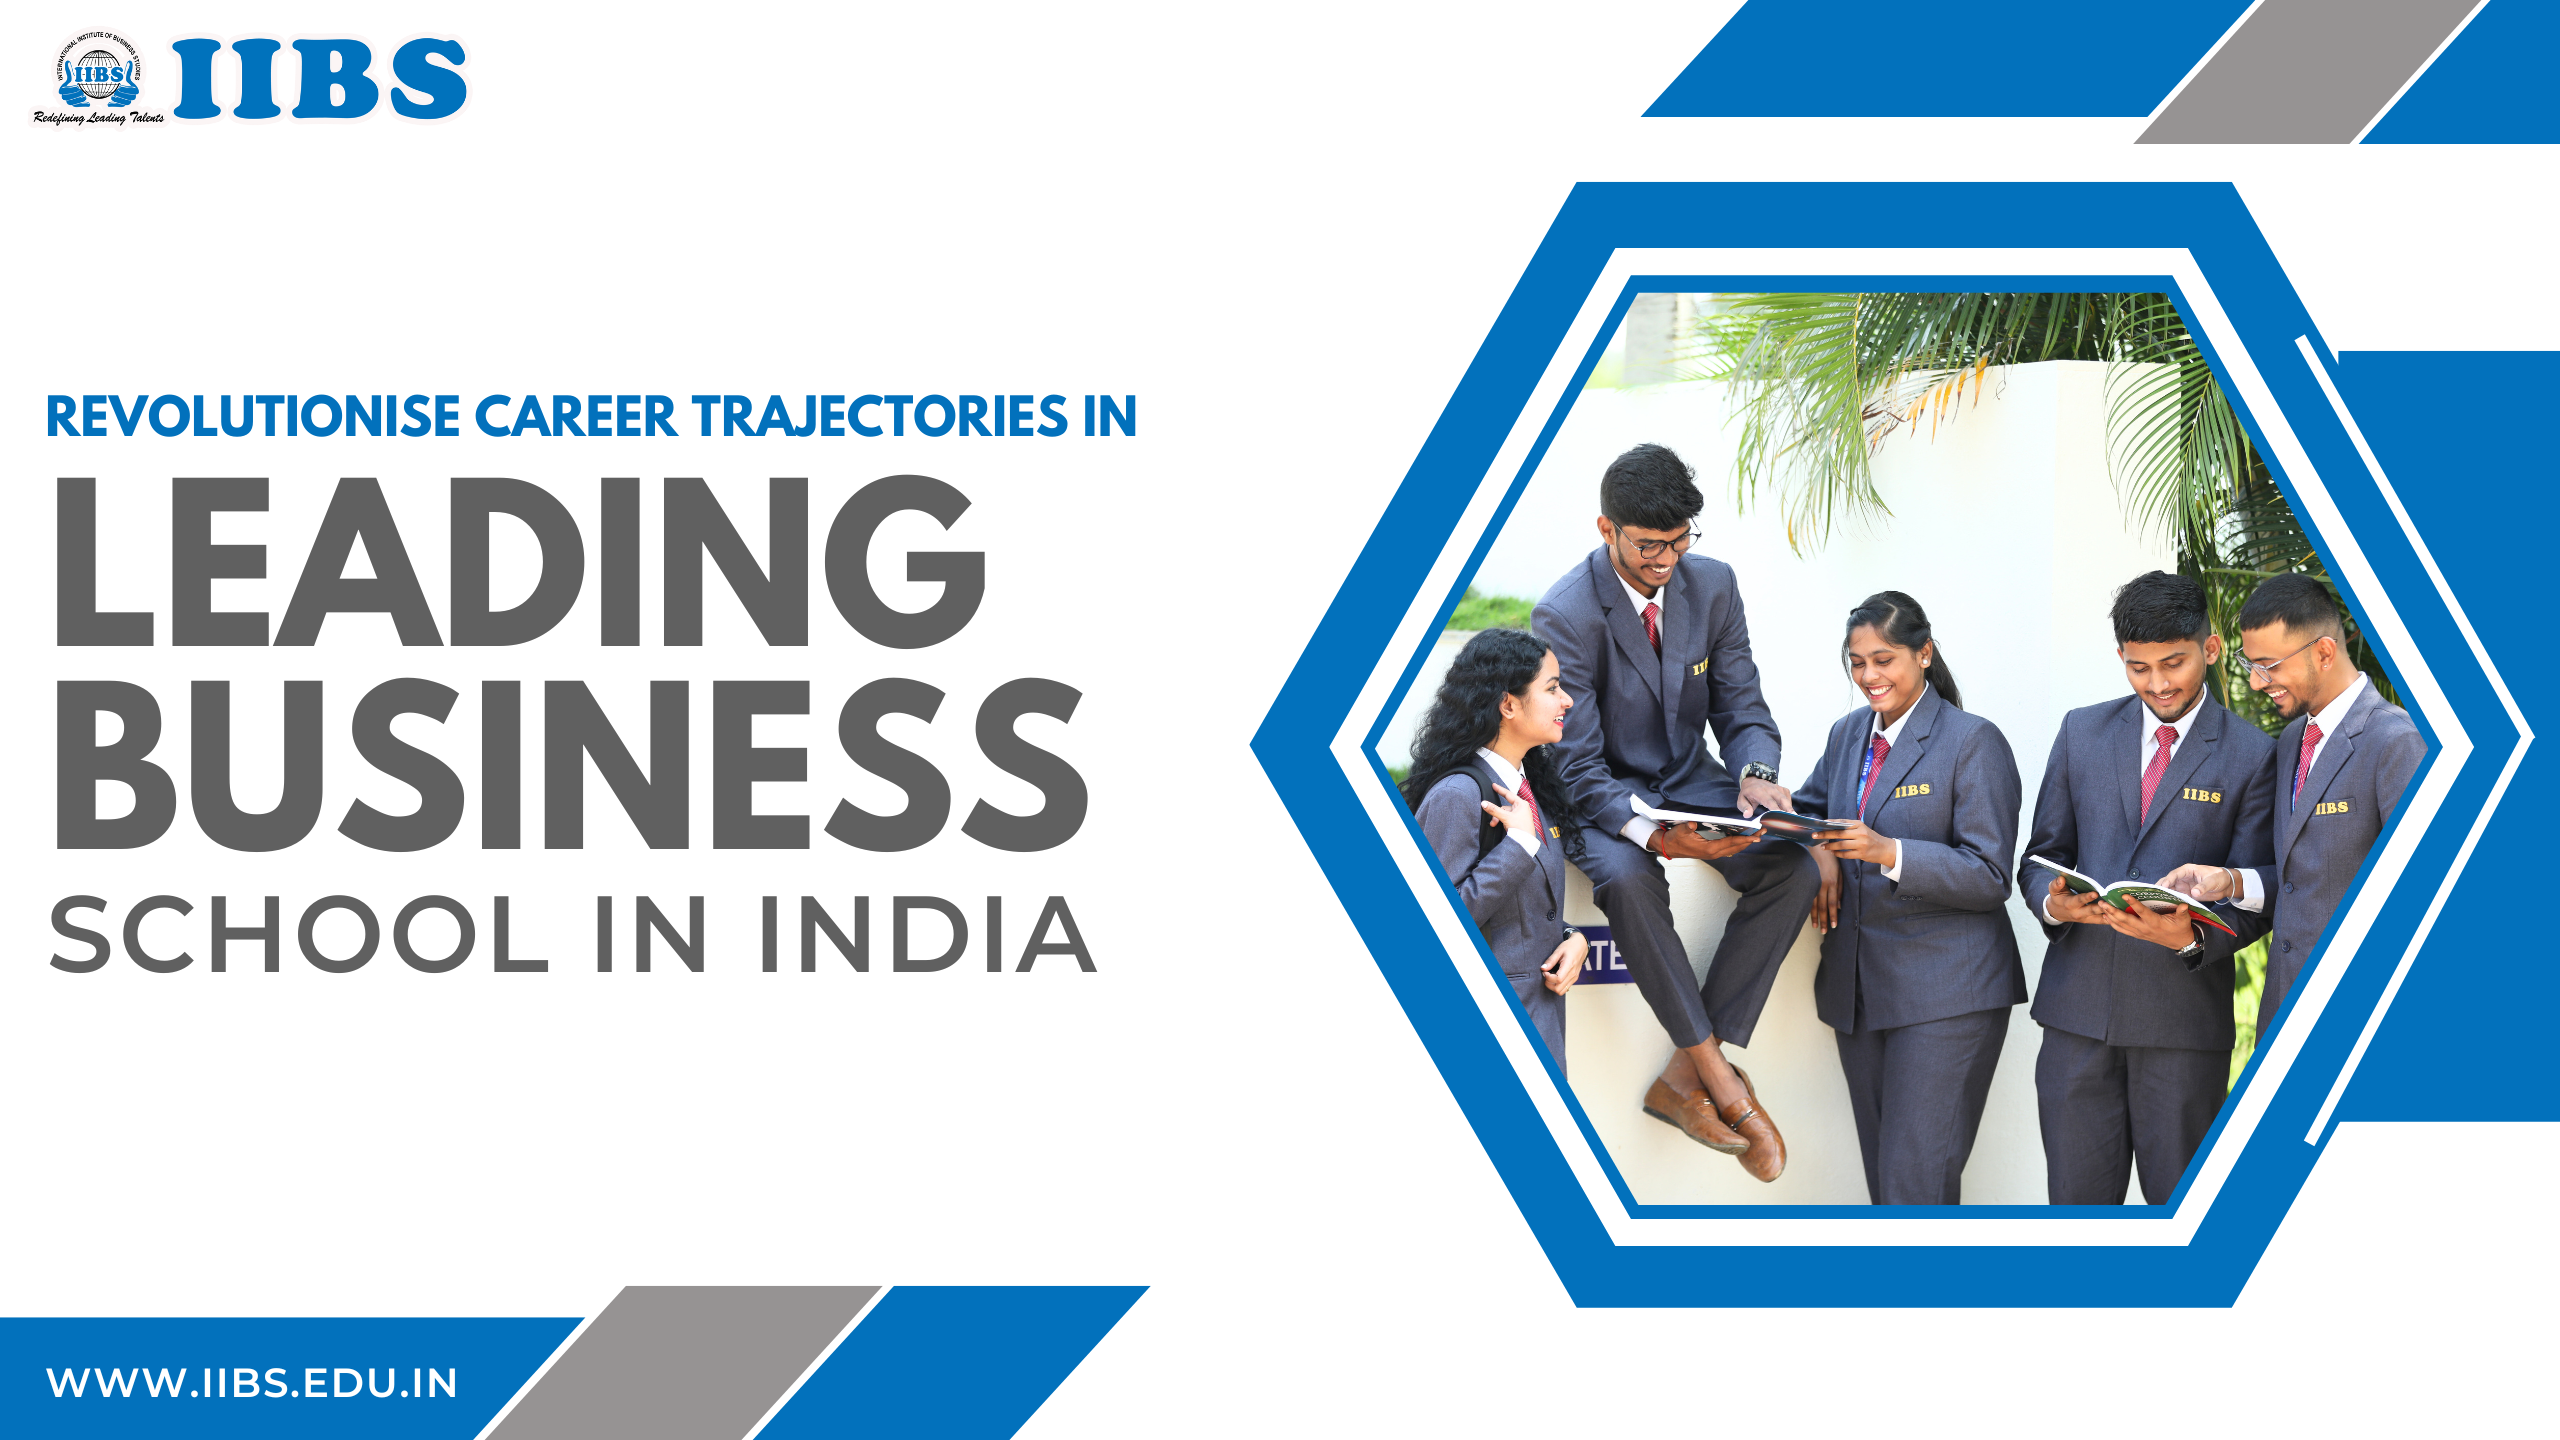 Revolutionise Career Trajectories in Leading Business School in India